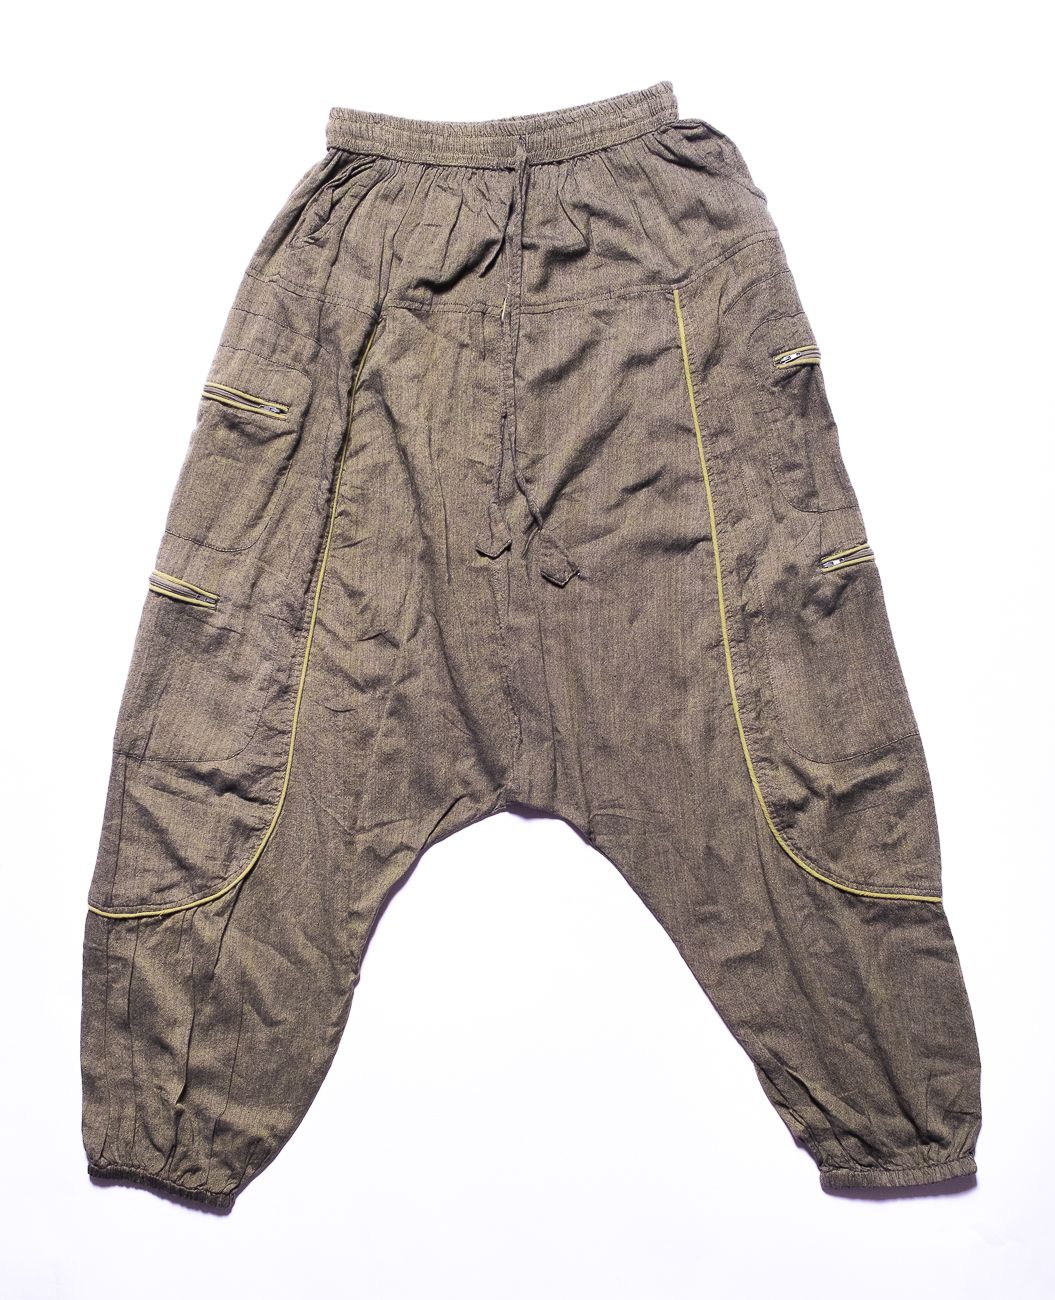 UNISEX turecké kalhoty RAMA z Nepálu z lehčího materiálu - NT0053-28B-017 KENAVI